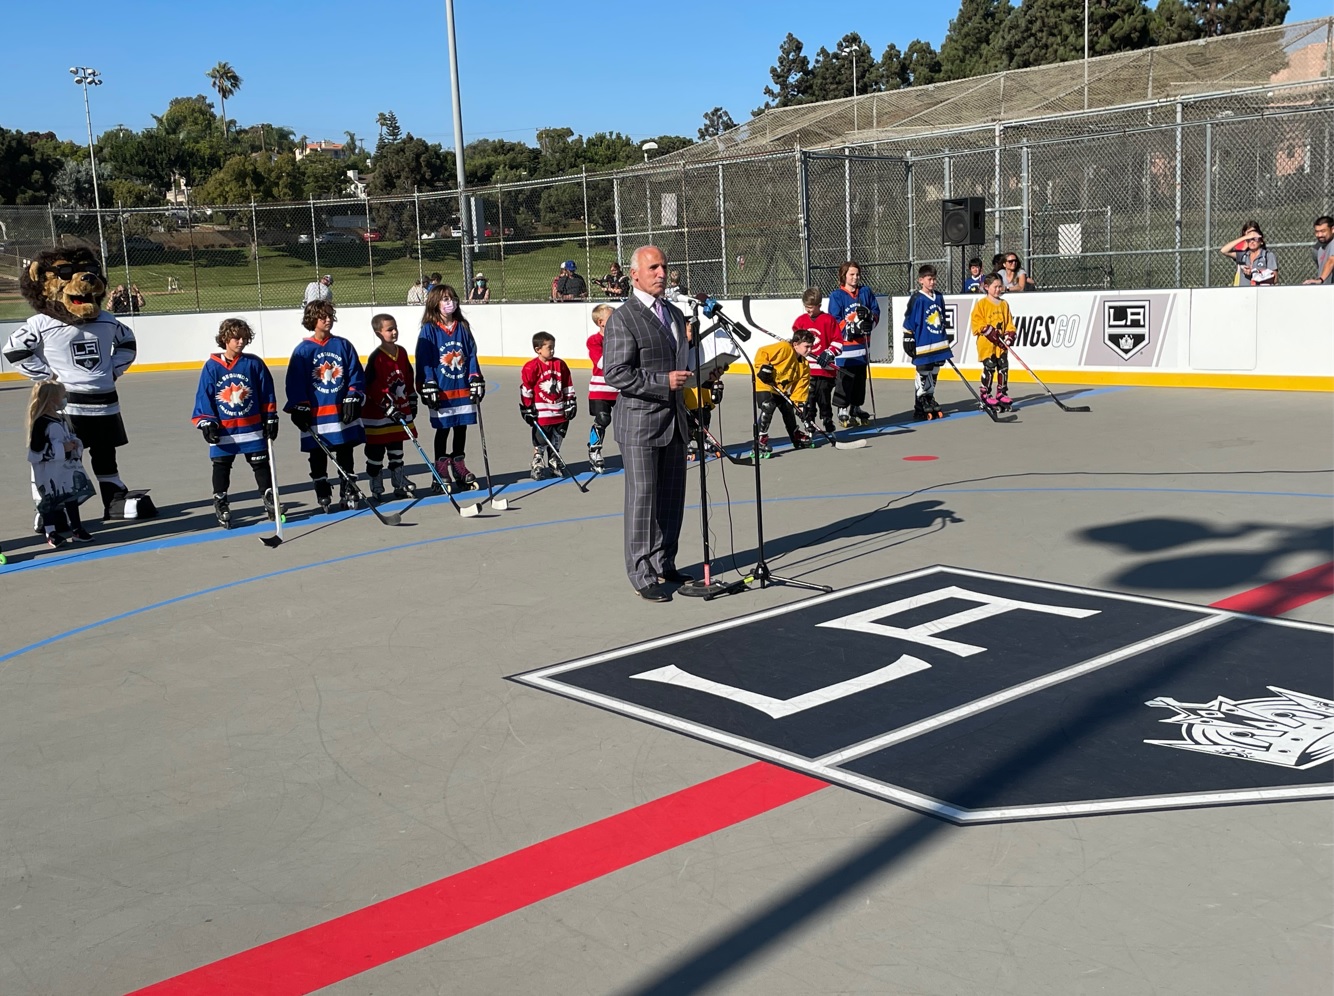 LA Kings ribbon cutting of new hockey roller rink in El Segundo. 